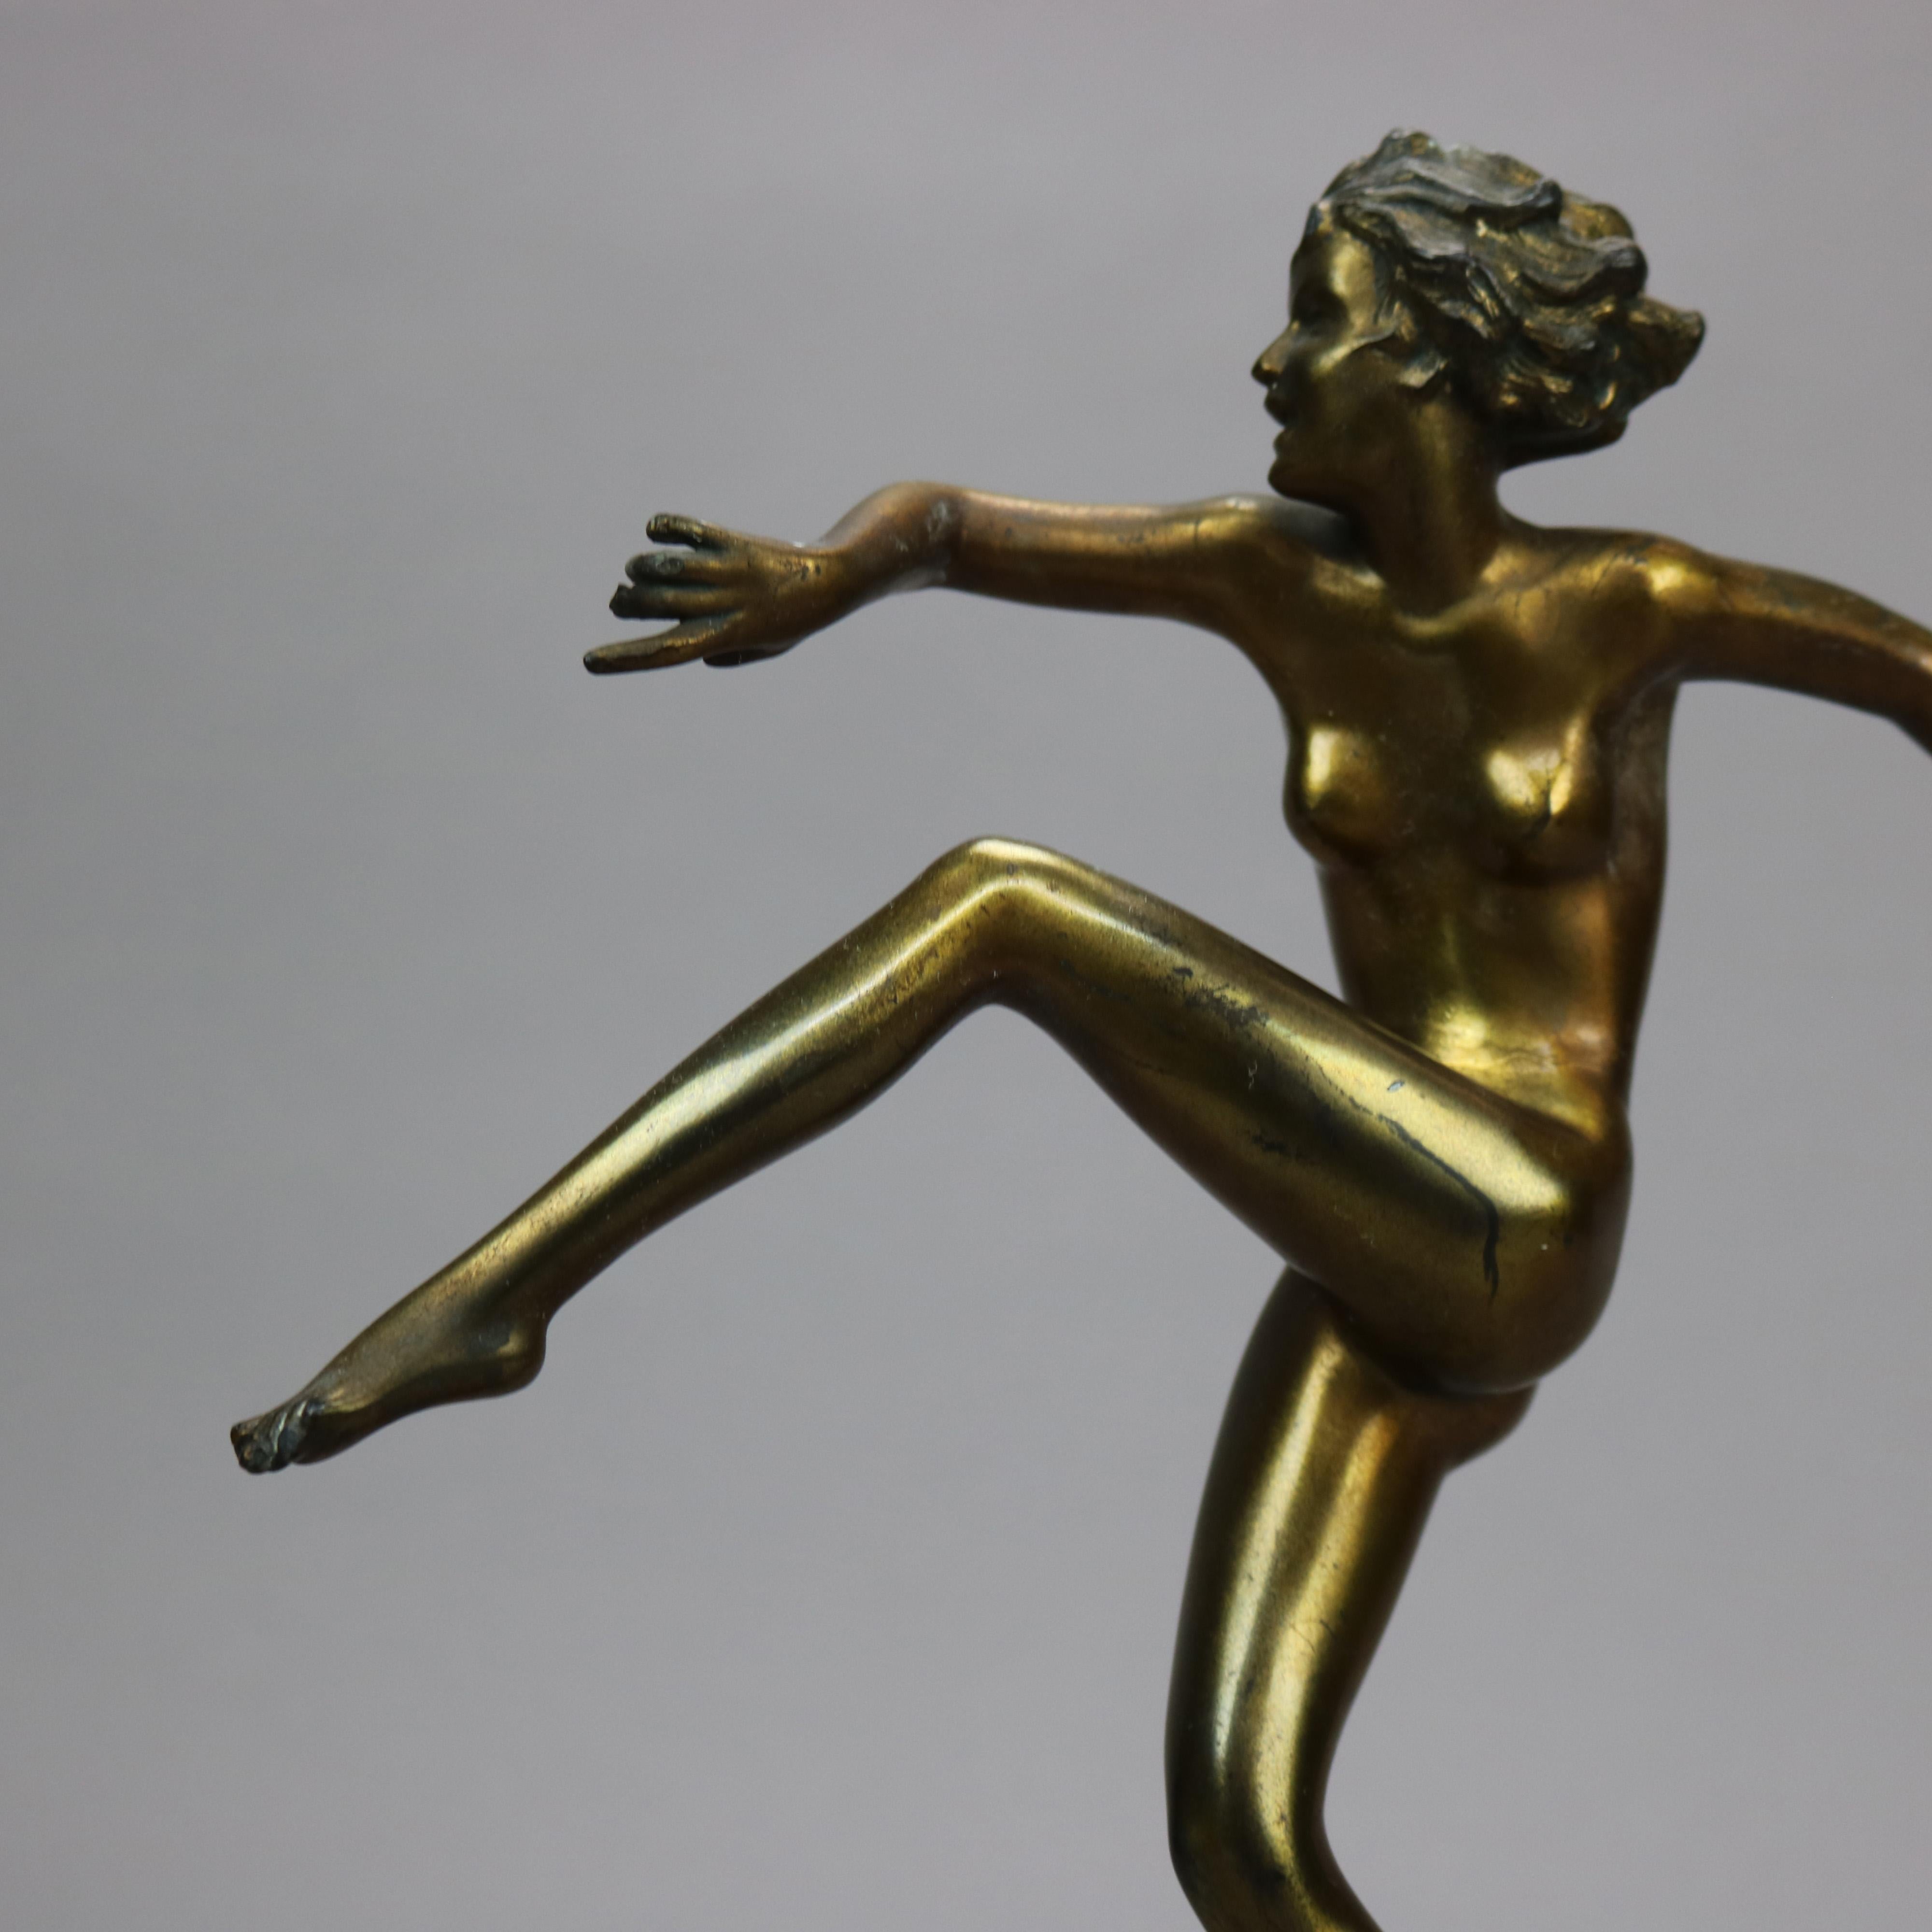 American Antique Art Deco Ronson Metal Dancing Nude Figure, Gold Finish, c1920